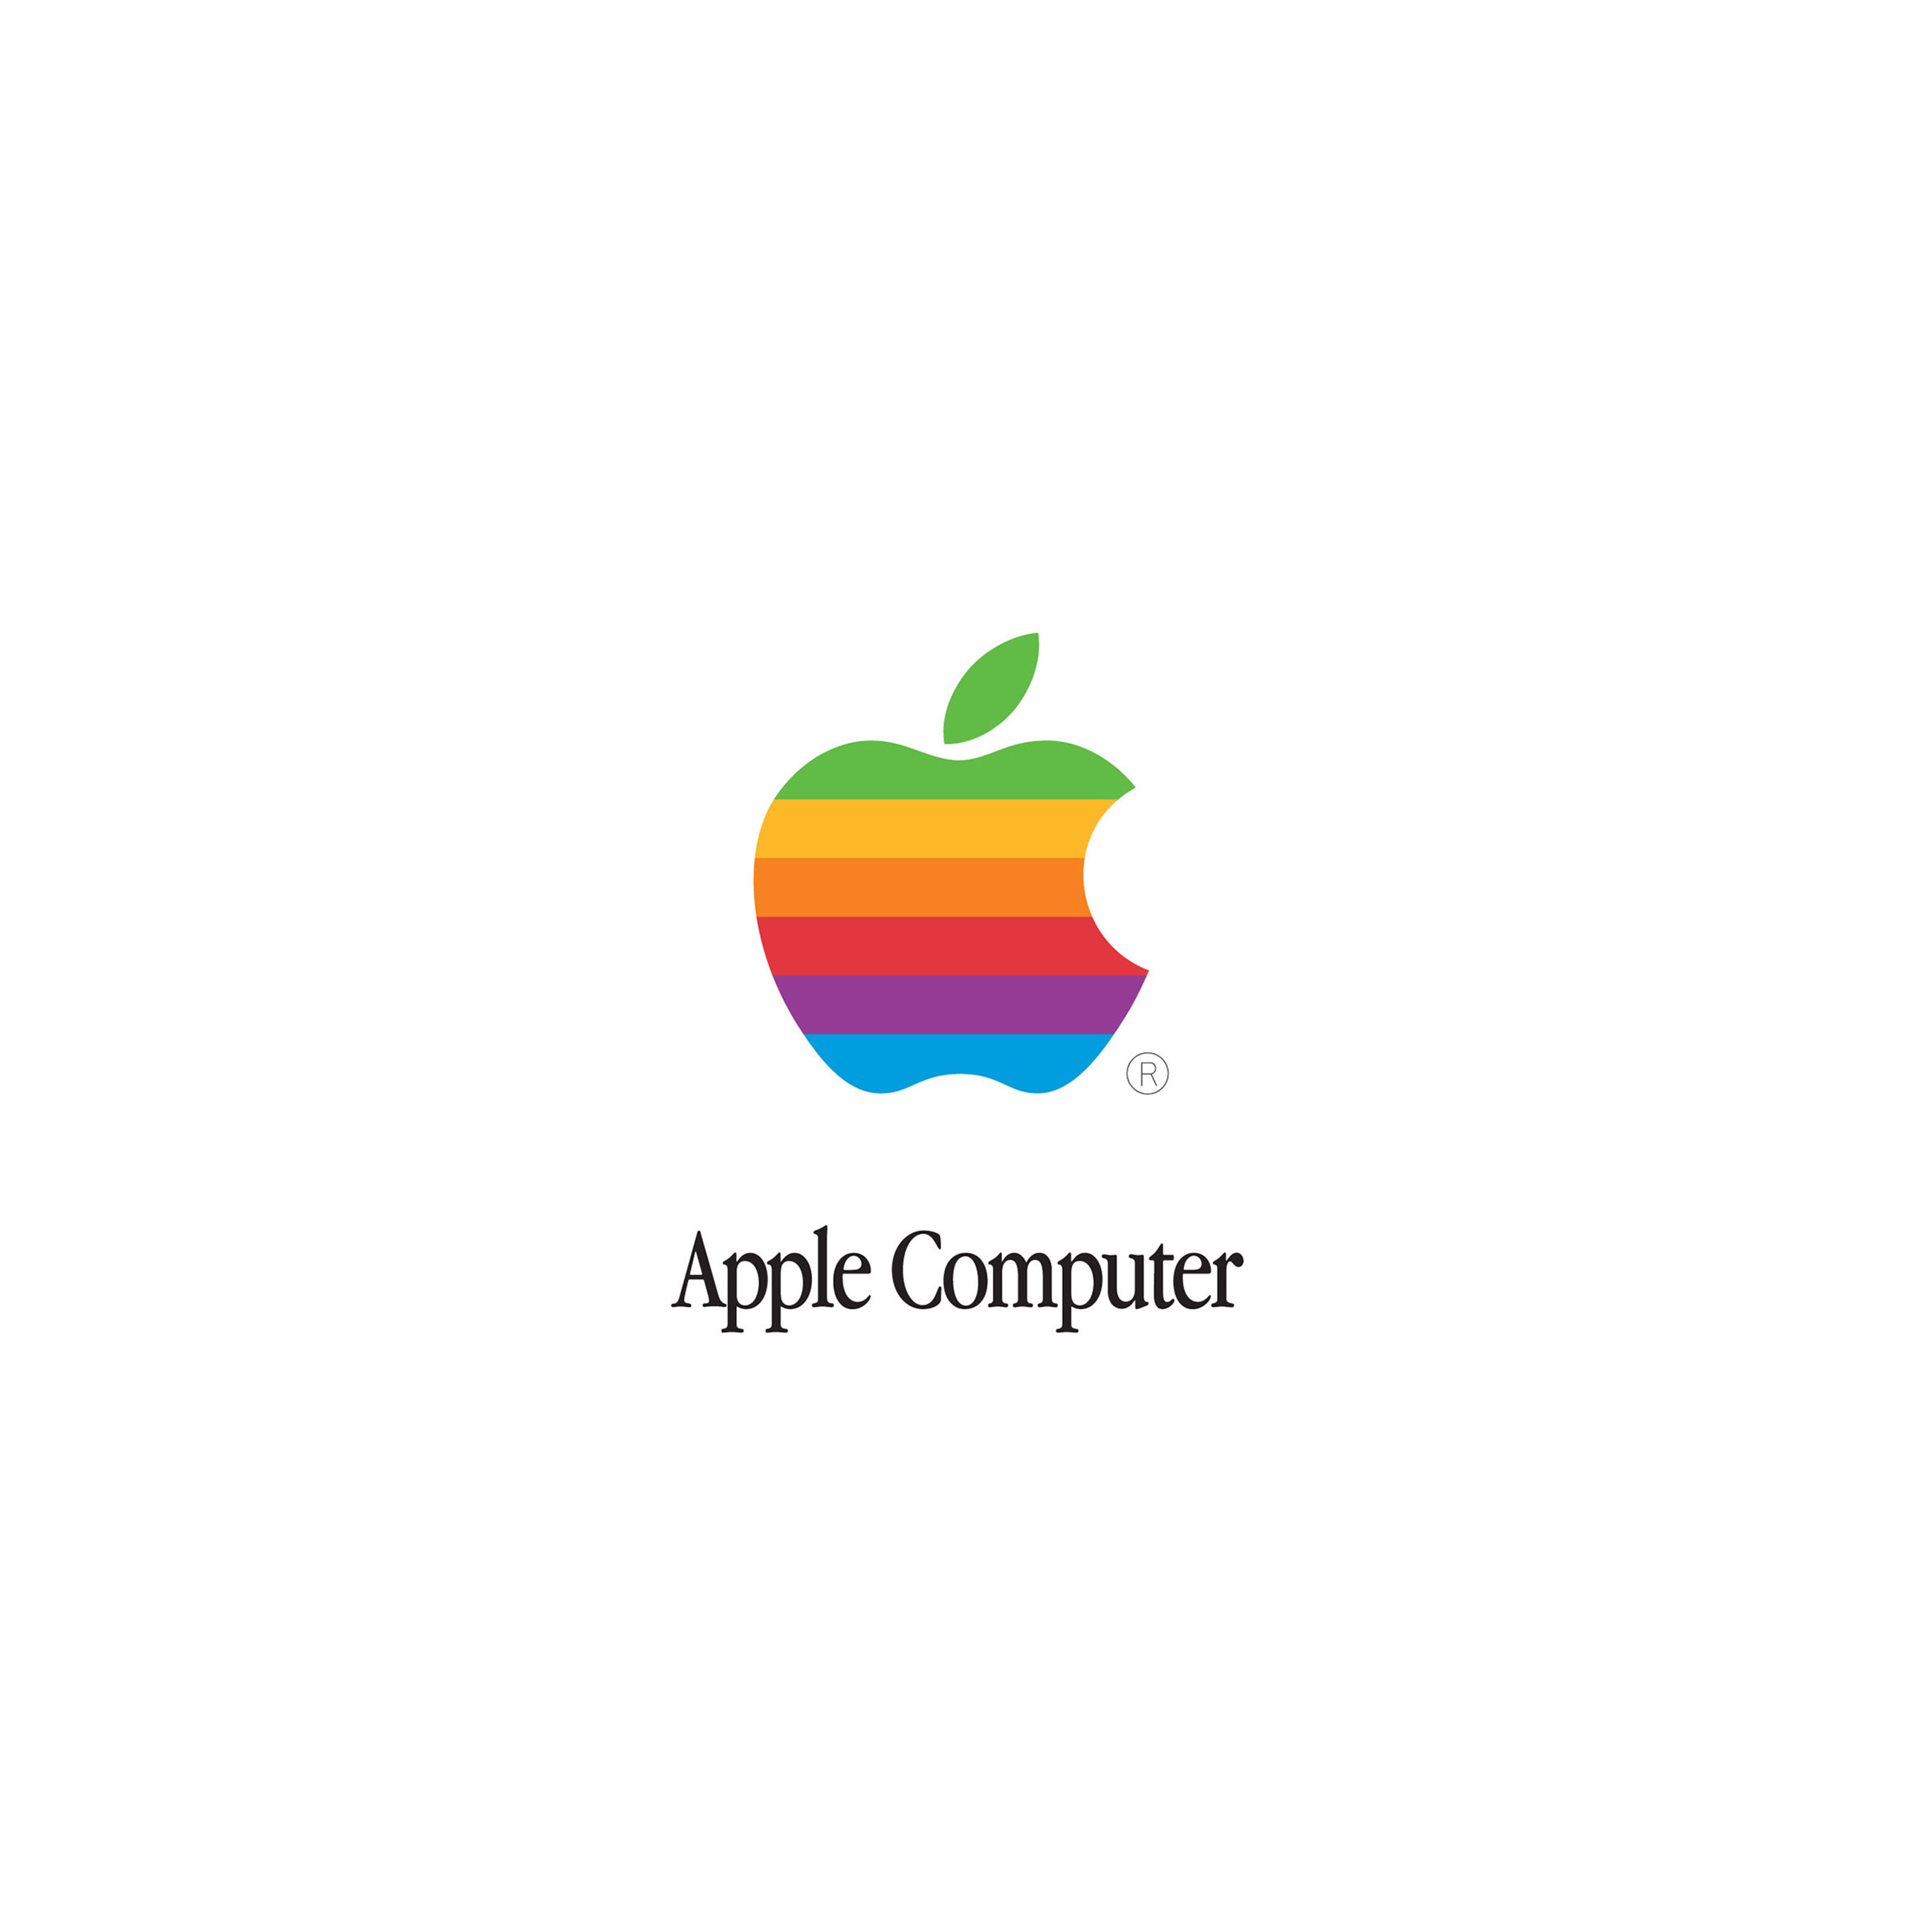 Ipad Apple Retro Logo Free Apple Papers